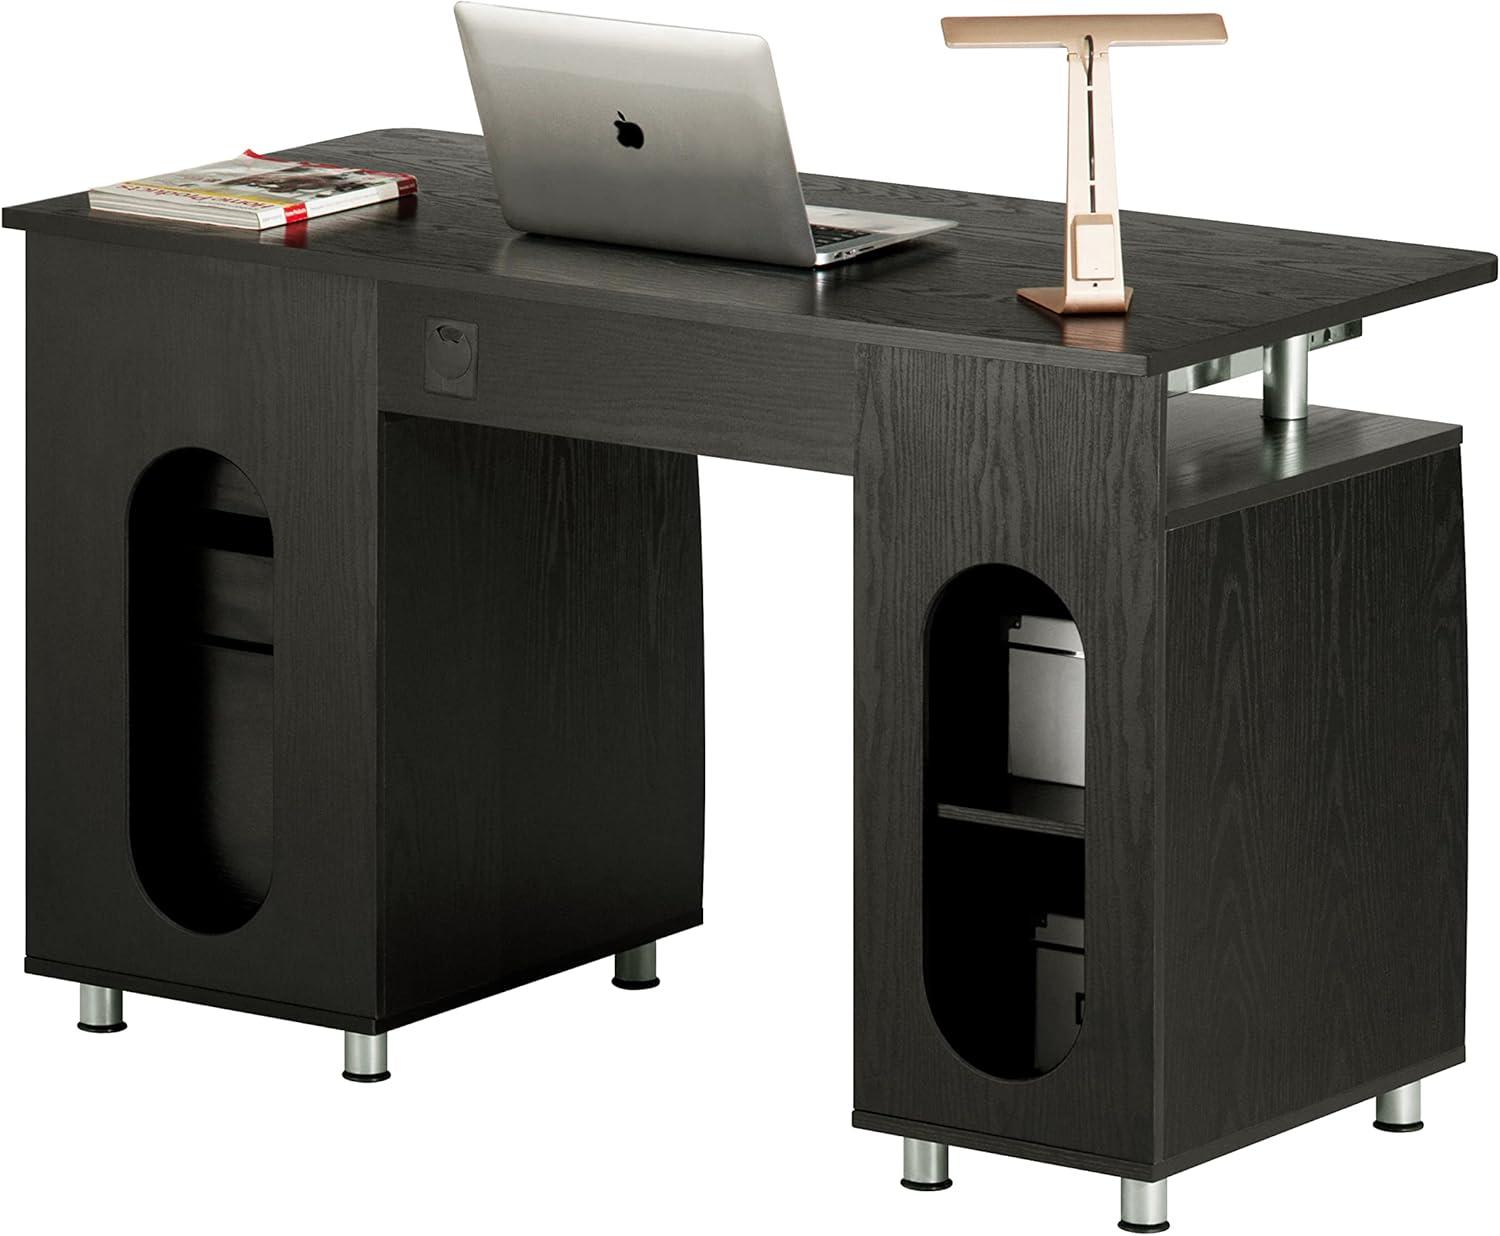 Espresso 52" Workstation Desk with Storage and Keyboard Tray